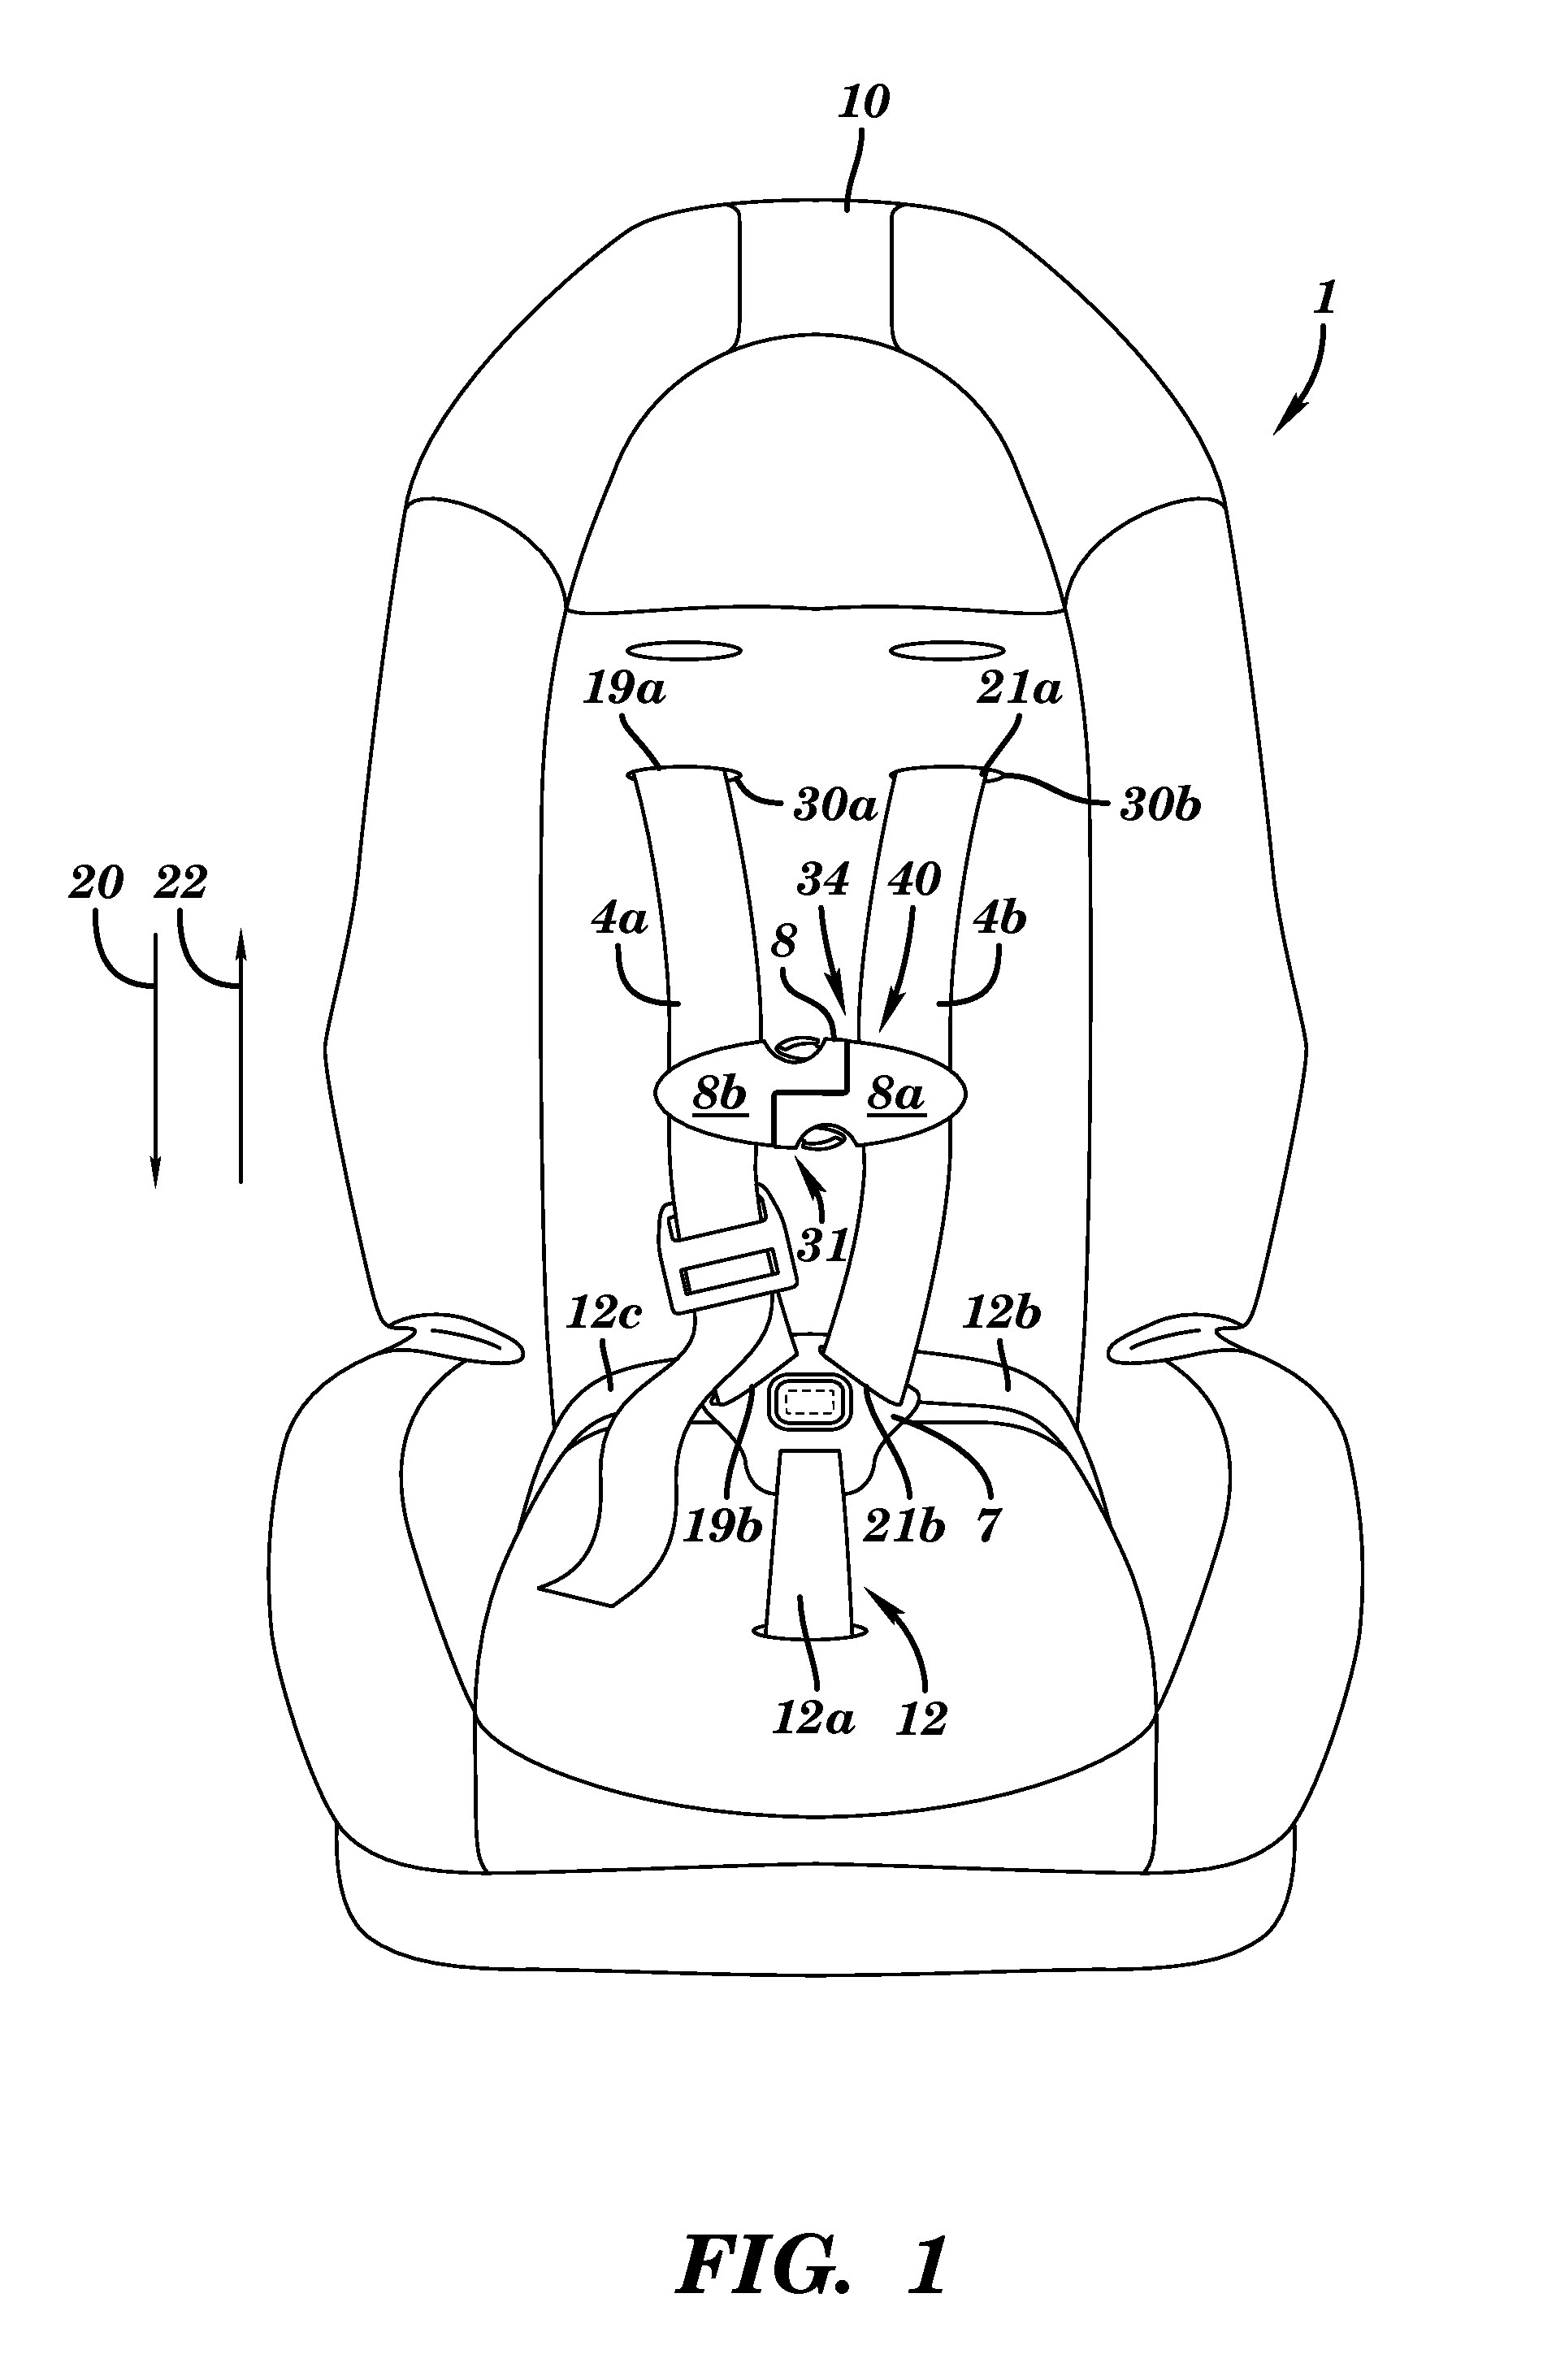 Locking harness apparatus and method